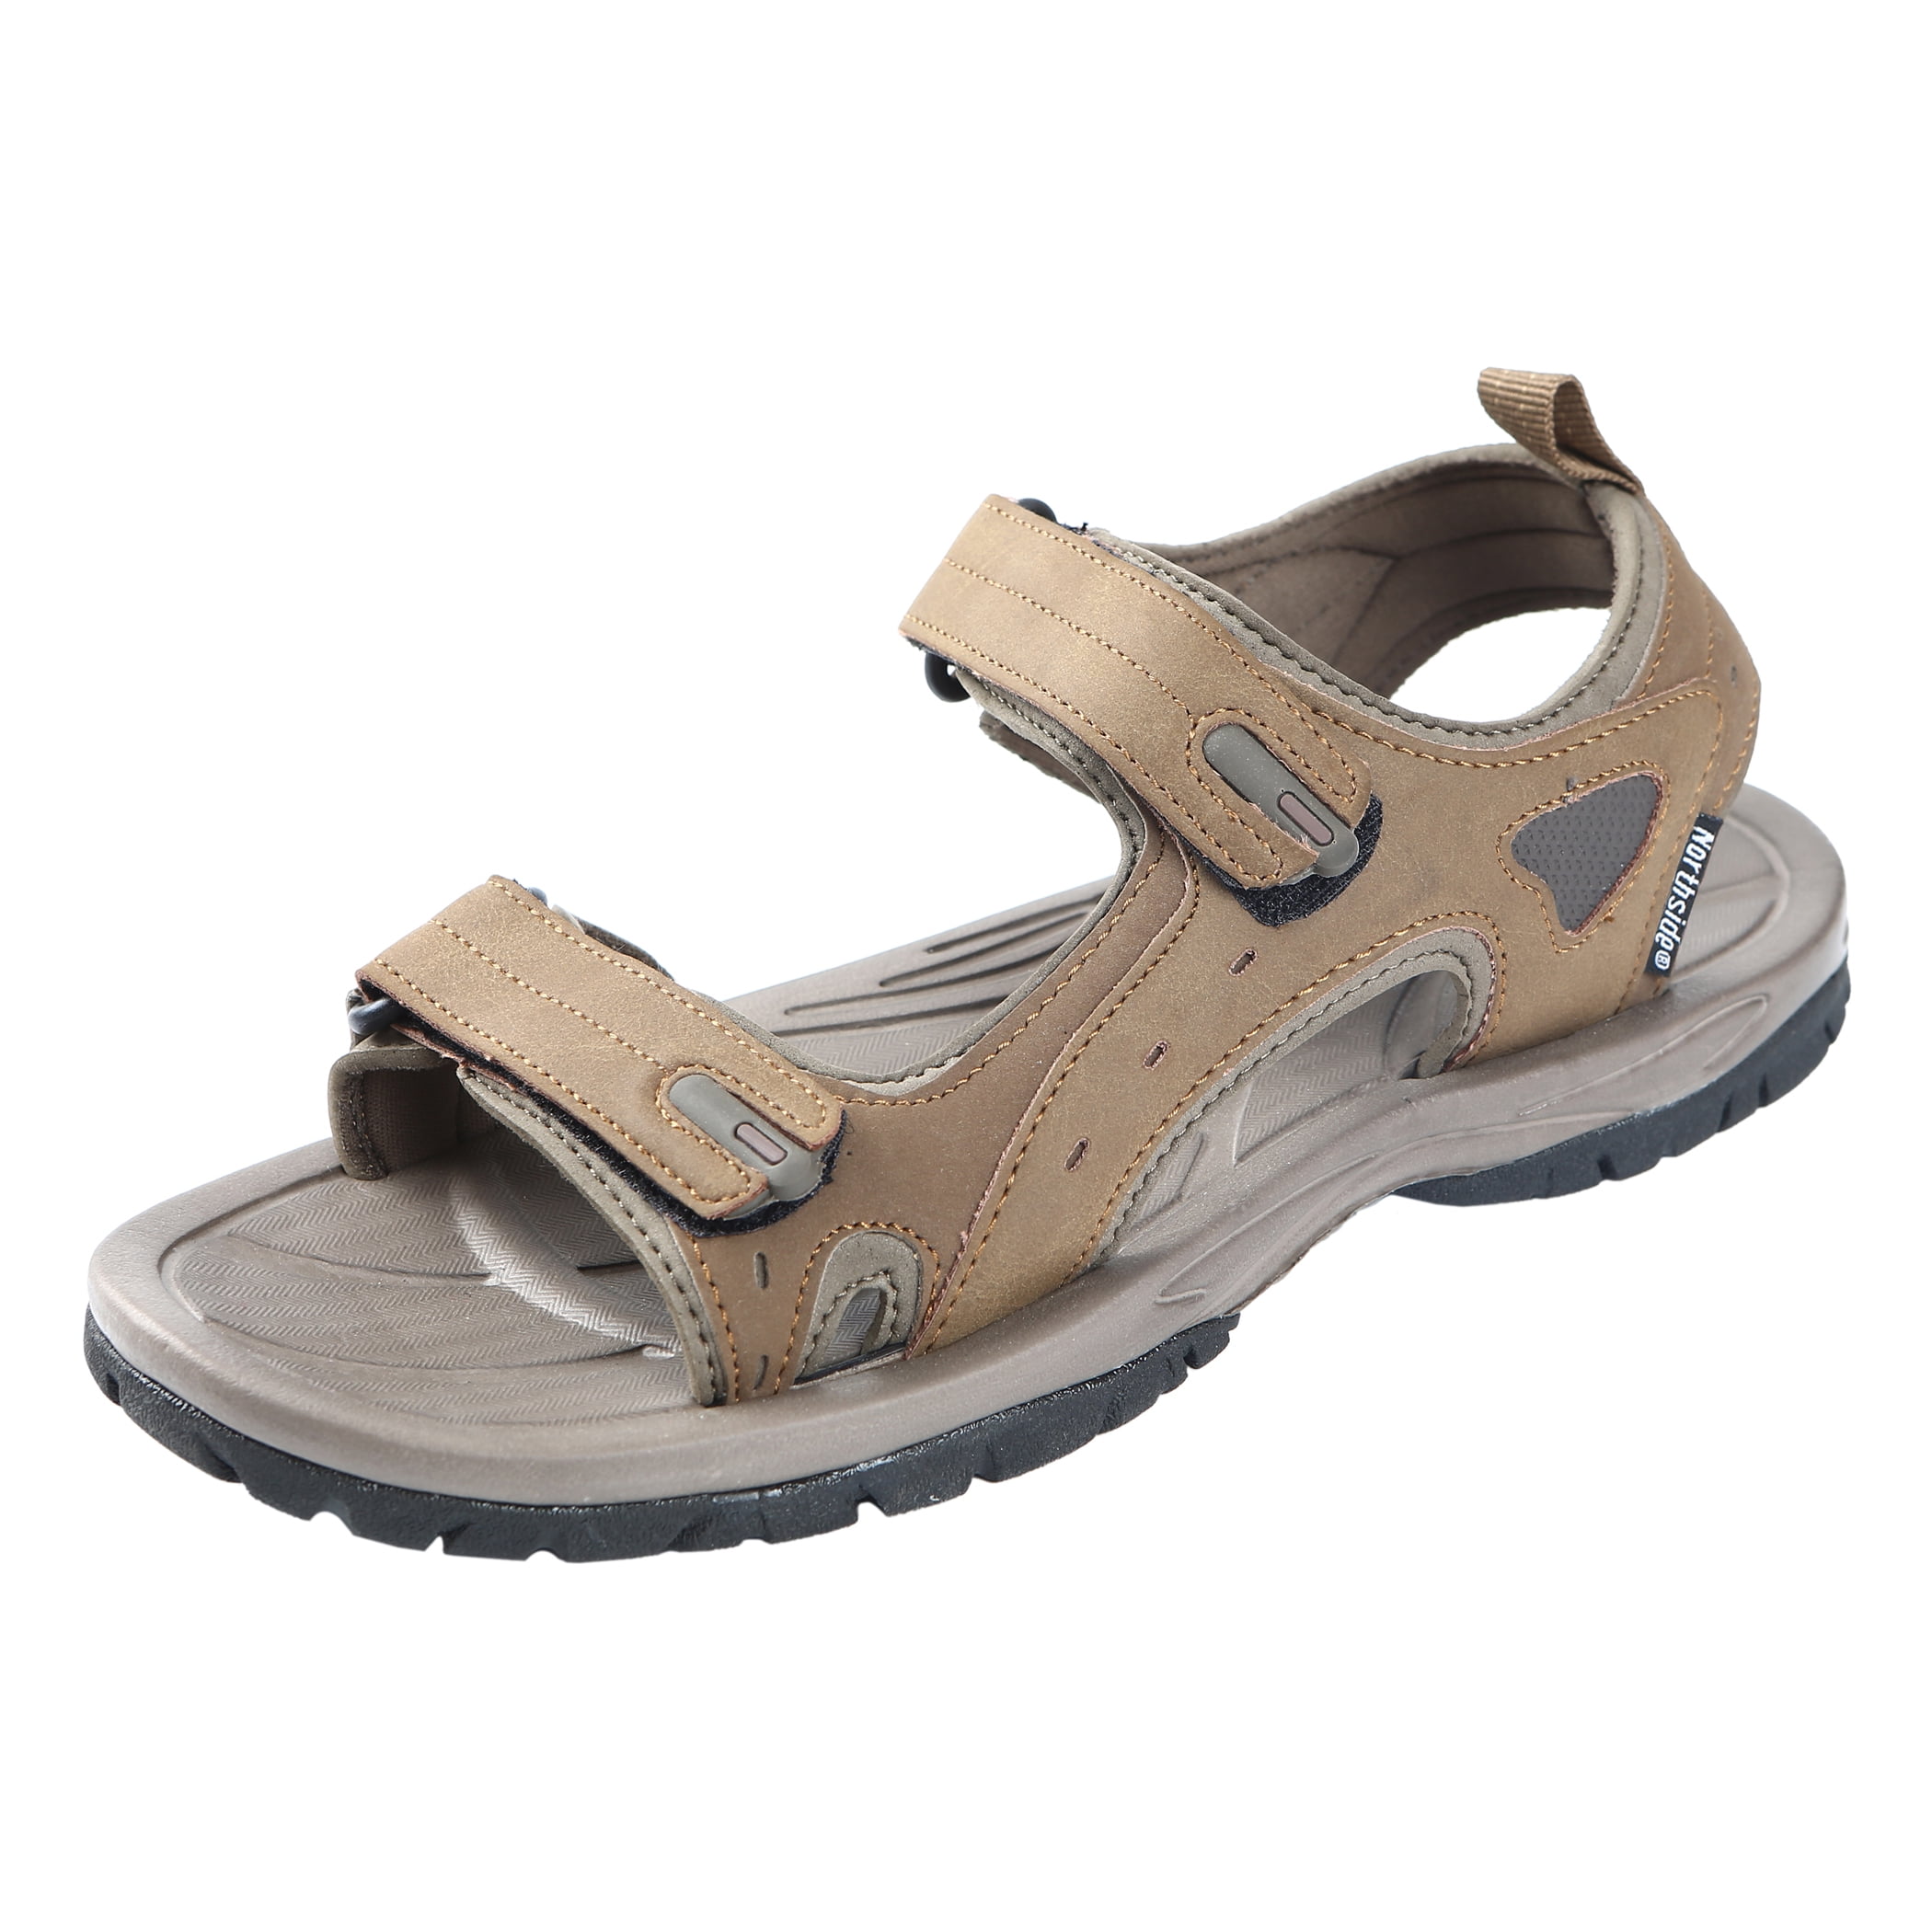 brown clog sandals